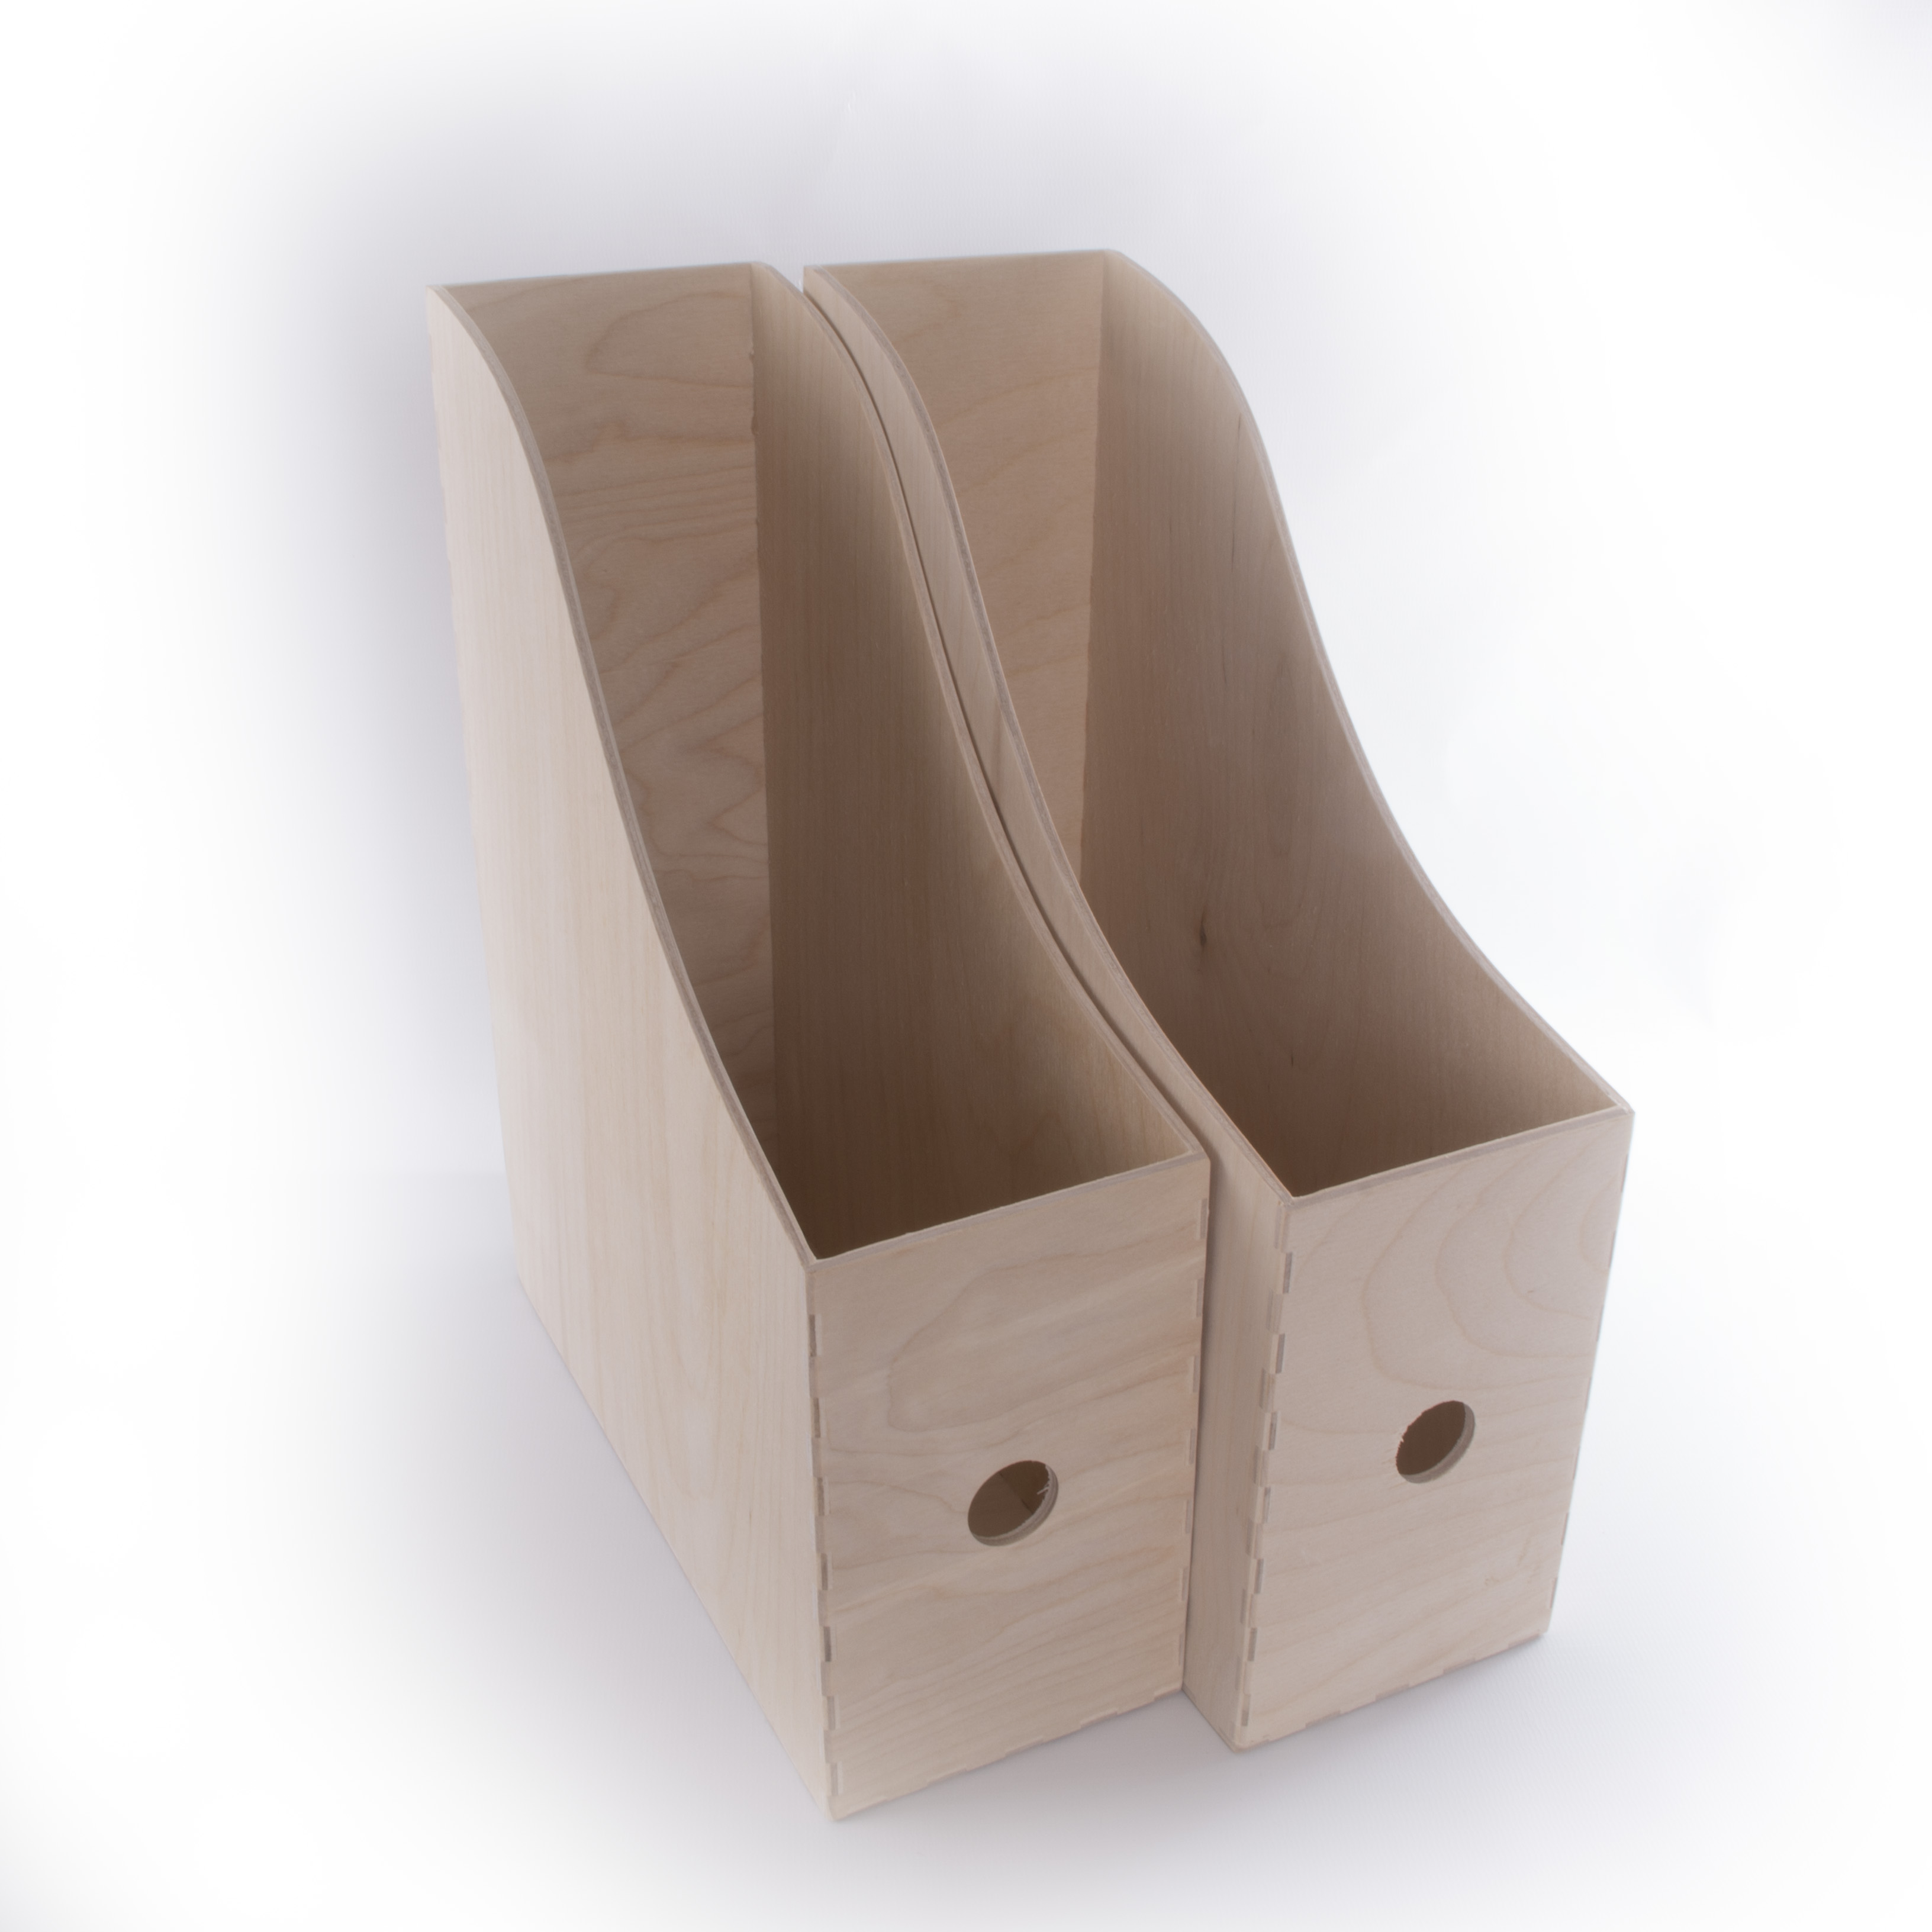 Wooden A4 File Organiser Magazine Box Paper Storage Desk Tidy